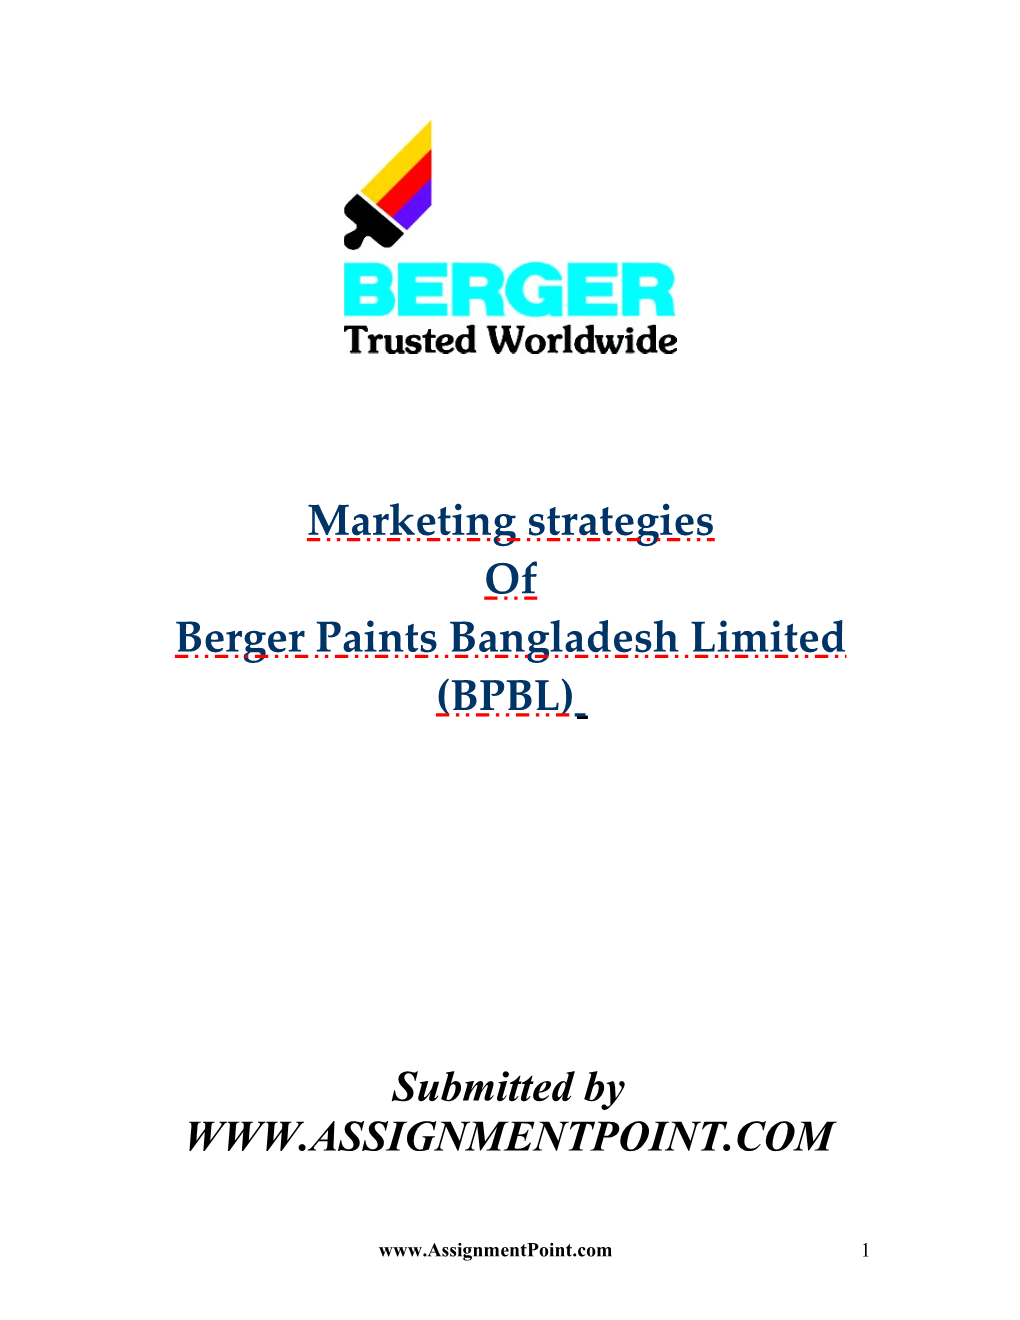 Berger Paints Bangladesh Limited (BPBL)